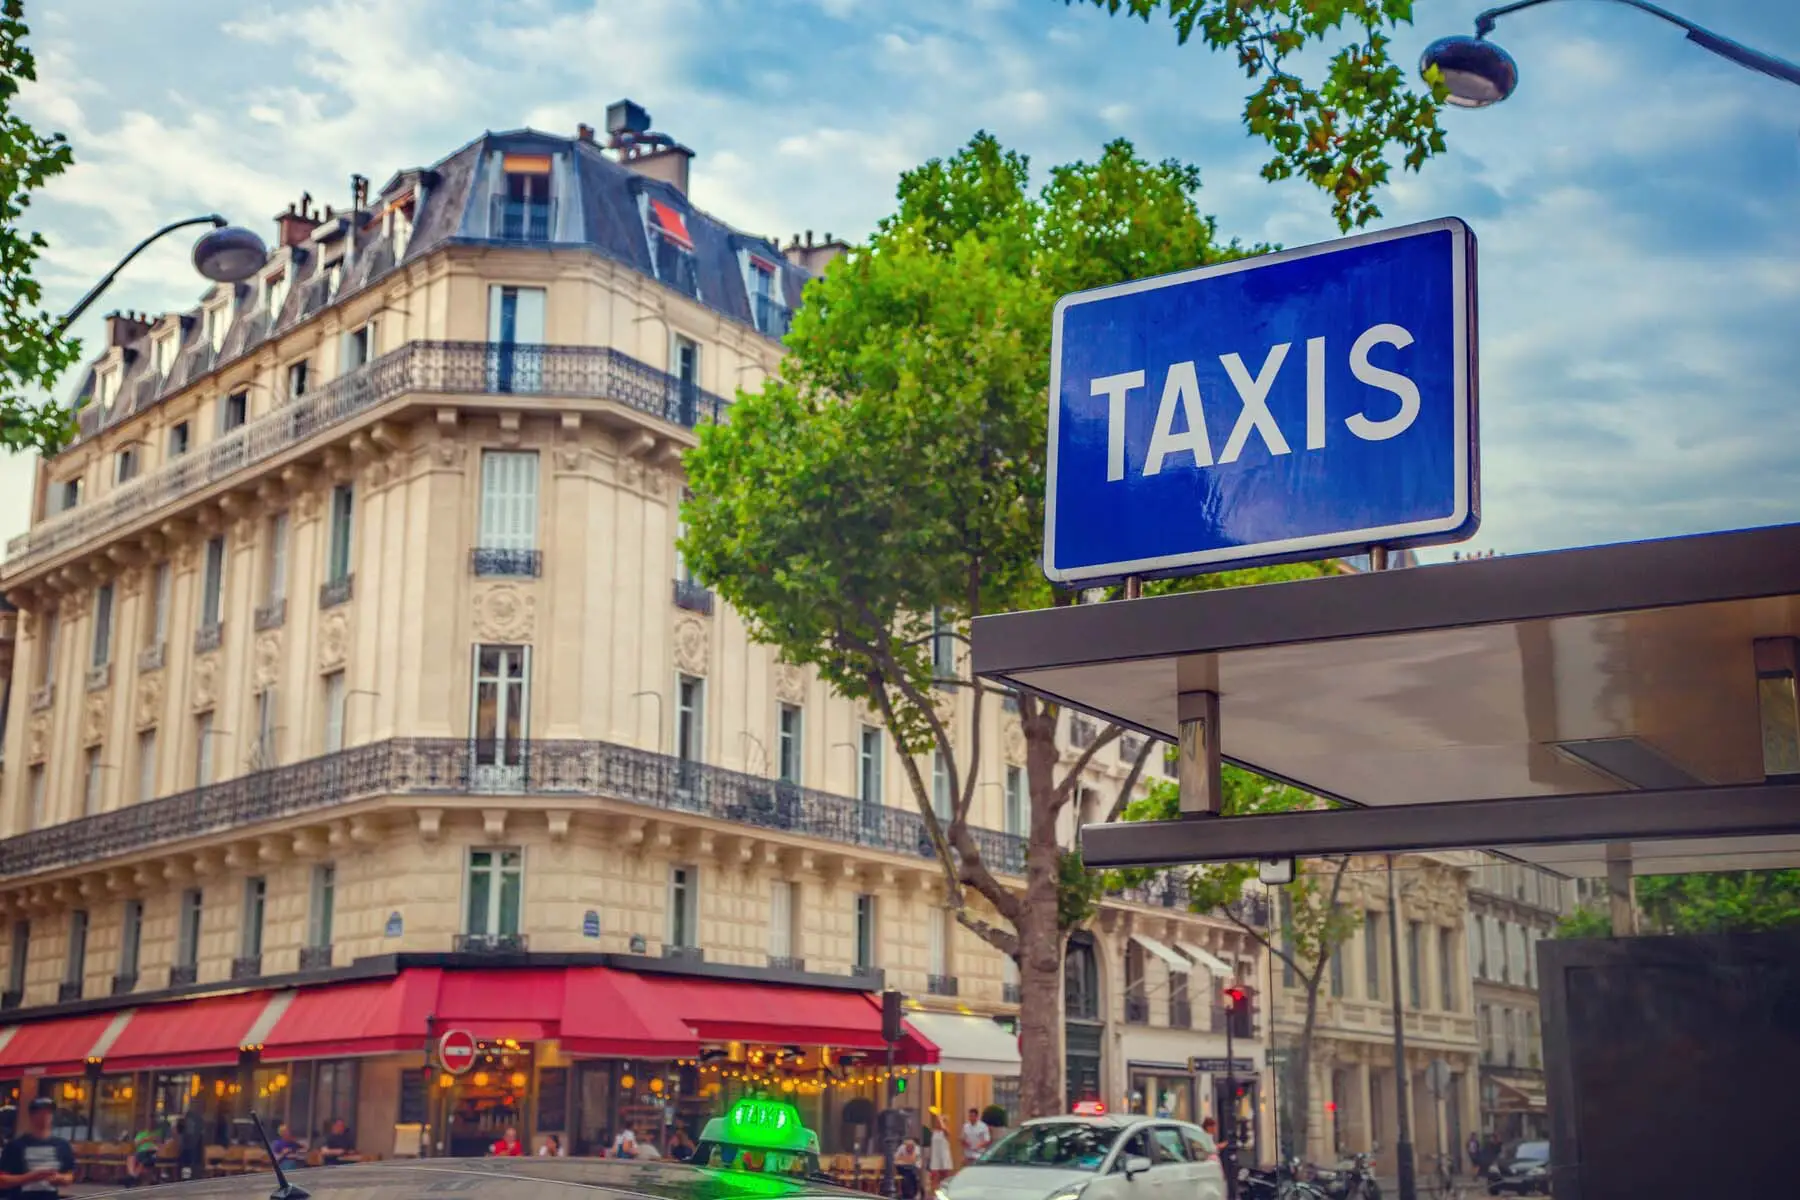 Taxi rank in Paris